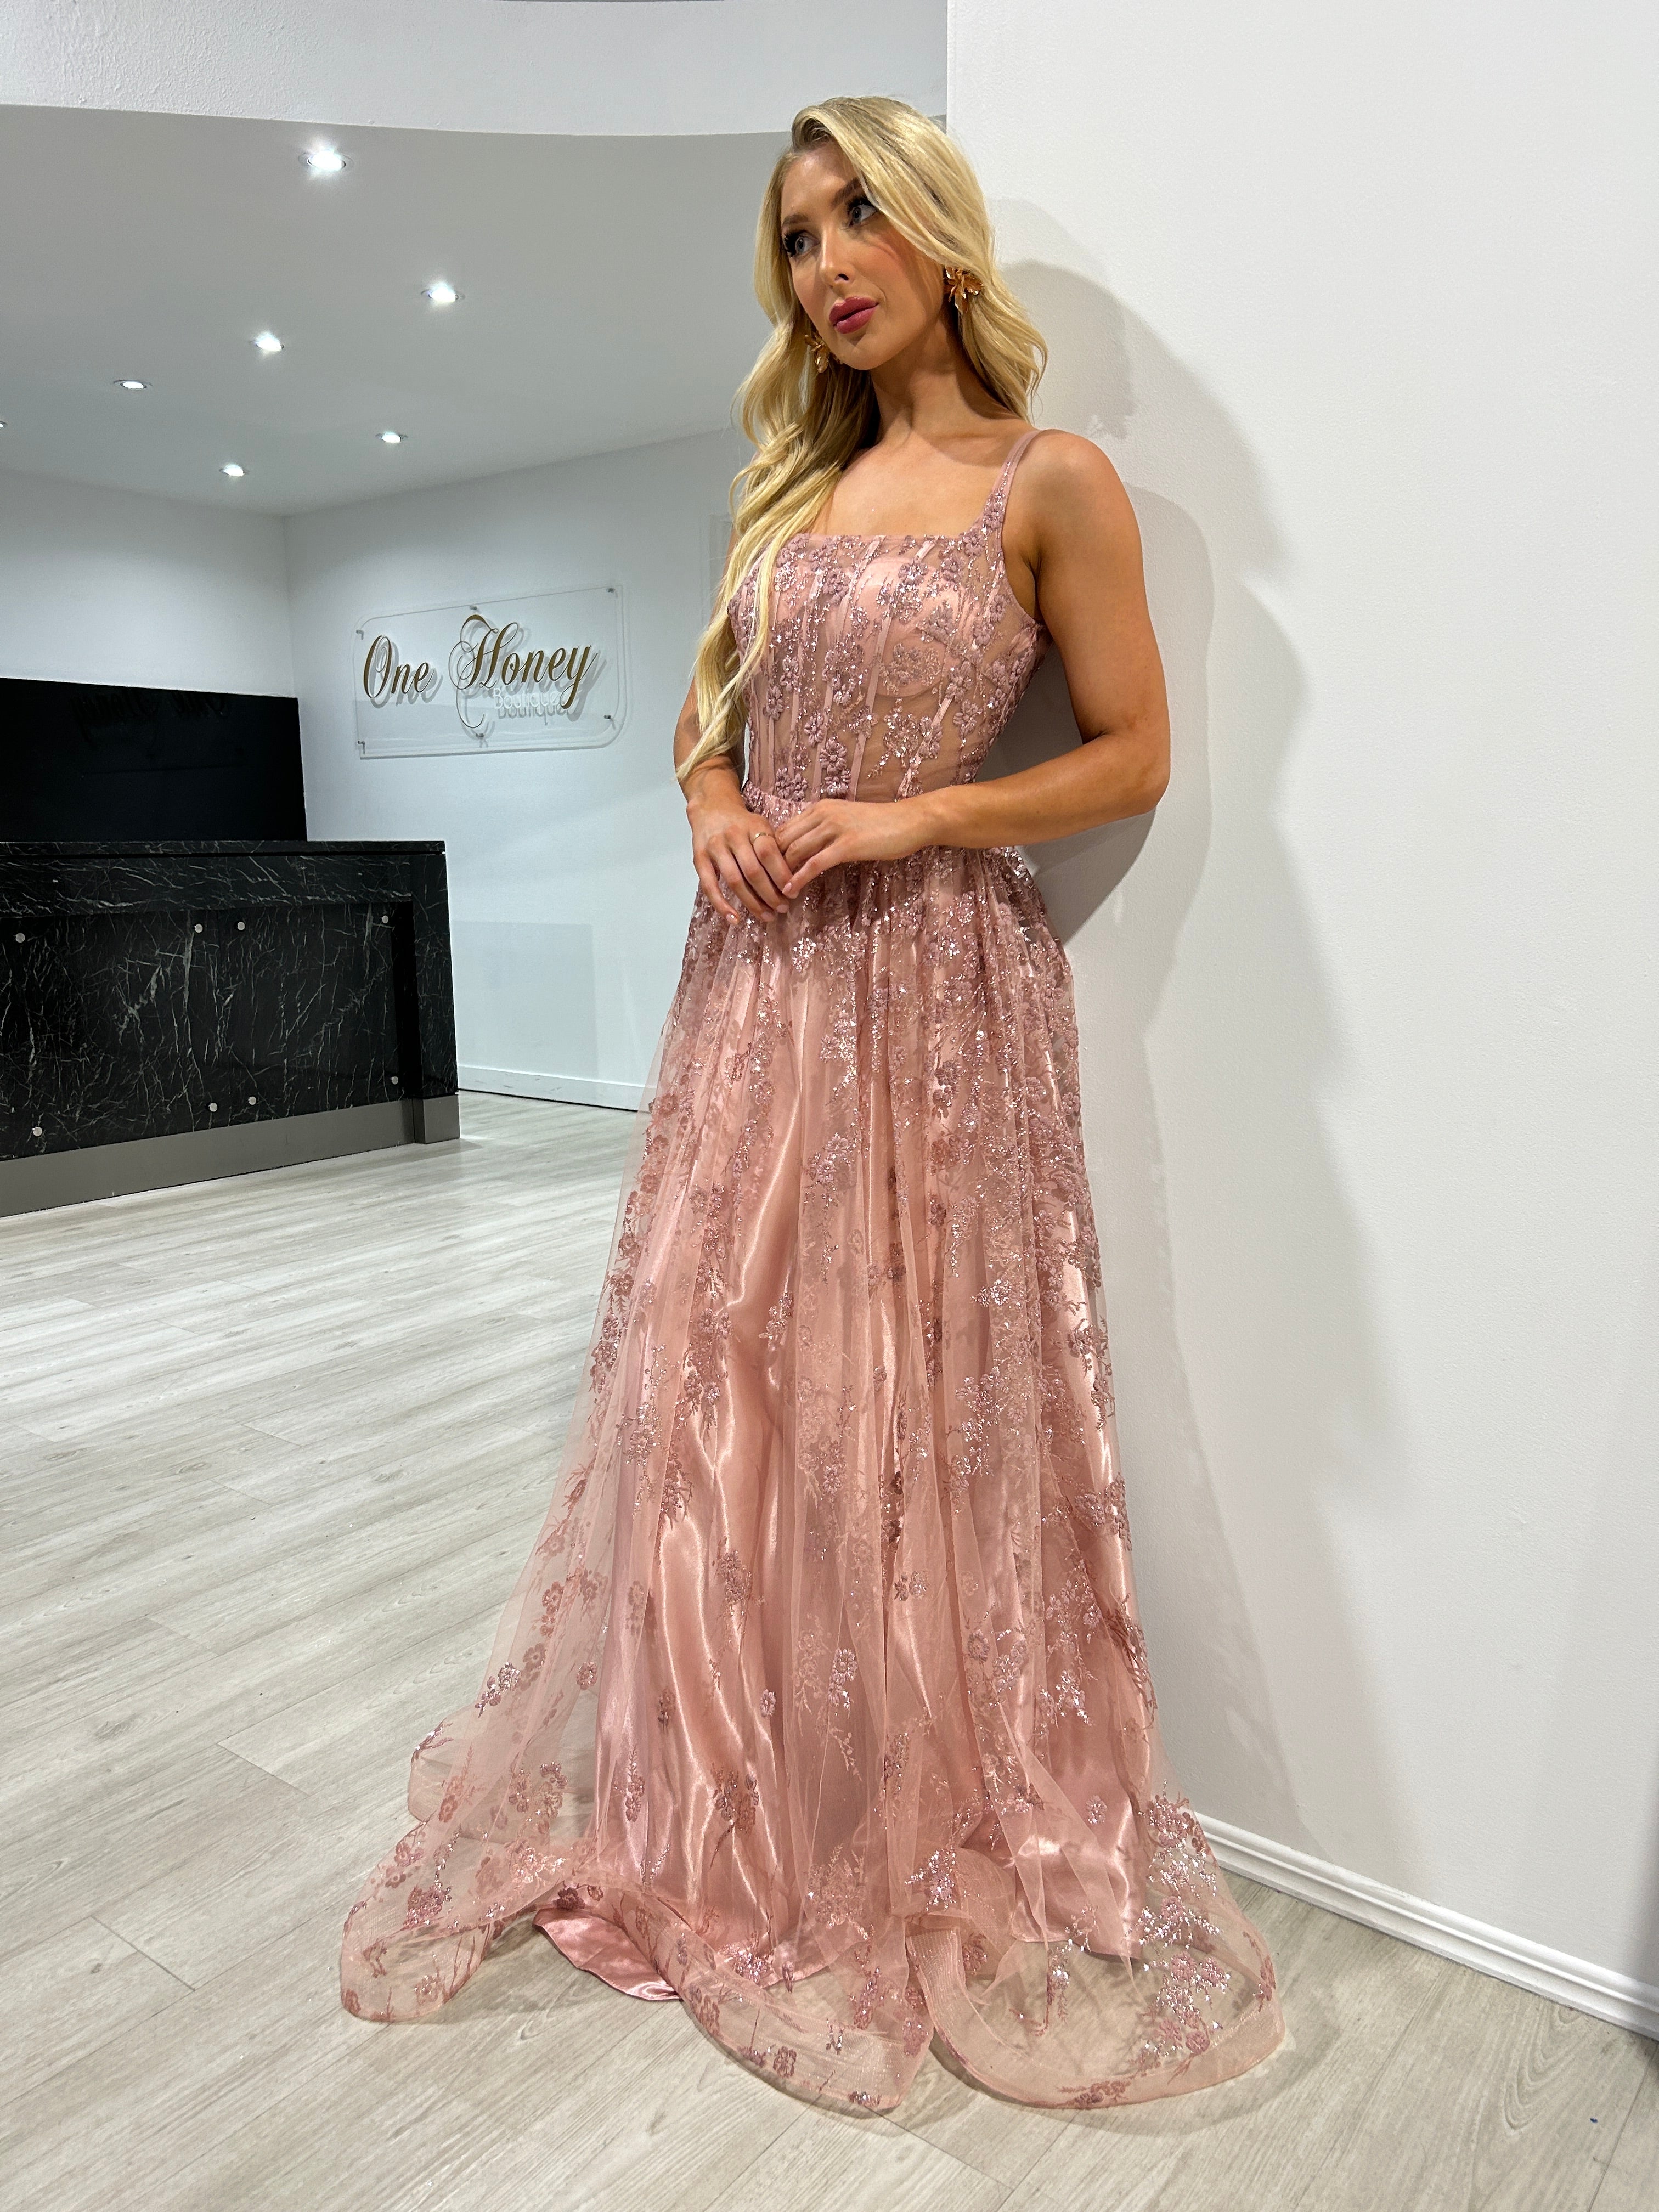 Honey Couture BELLAMY Rose Gold Glitter Ball Gown Formal Dress